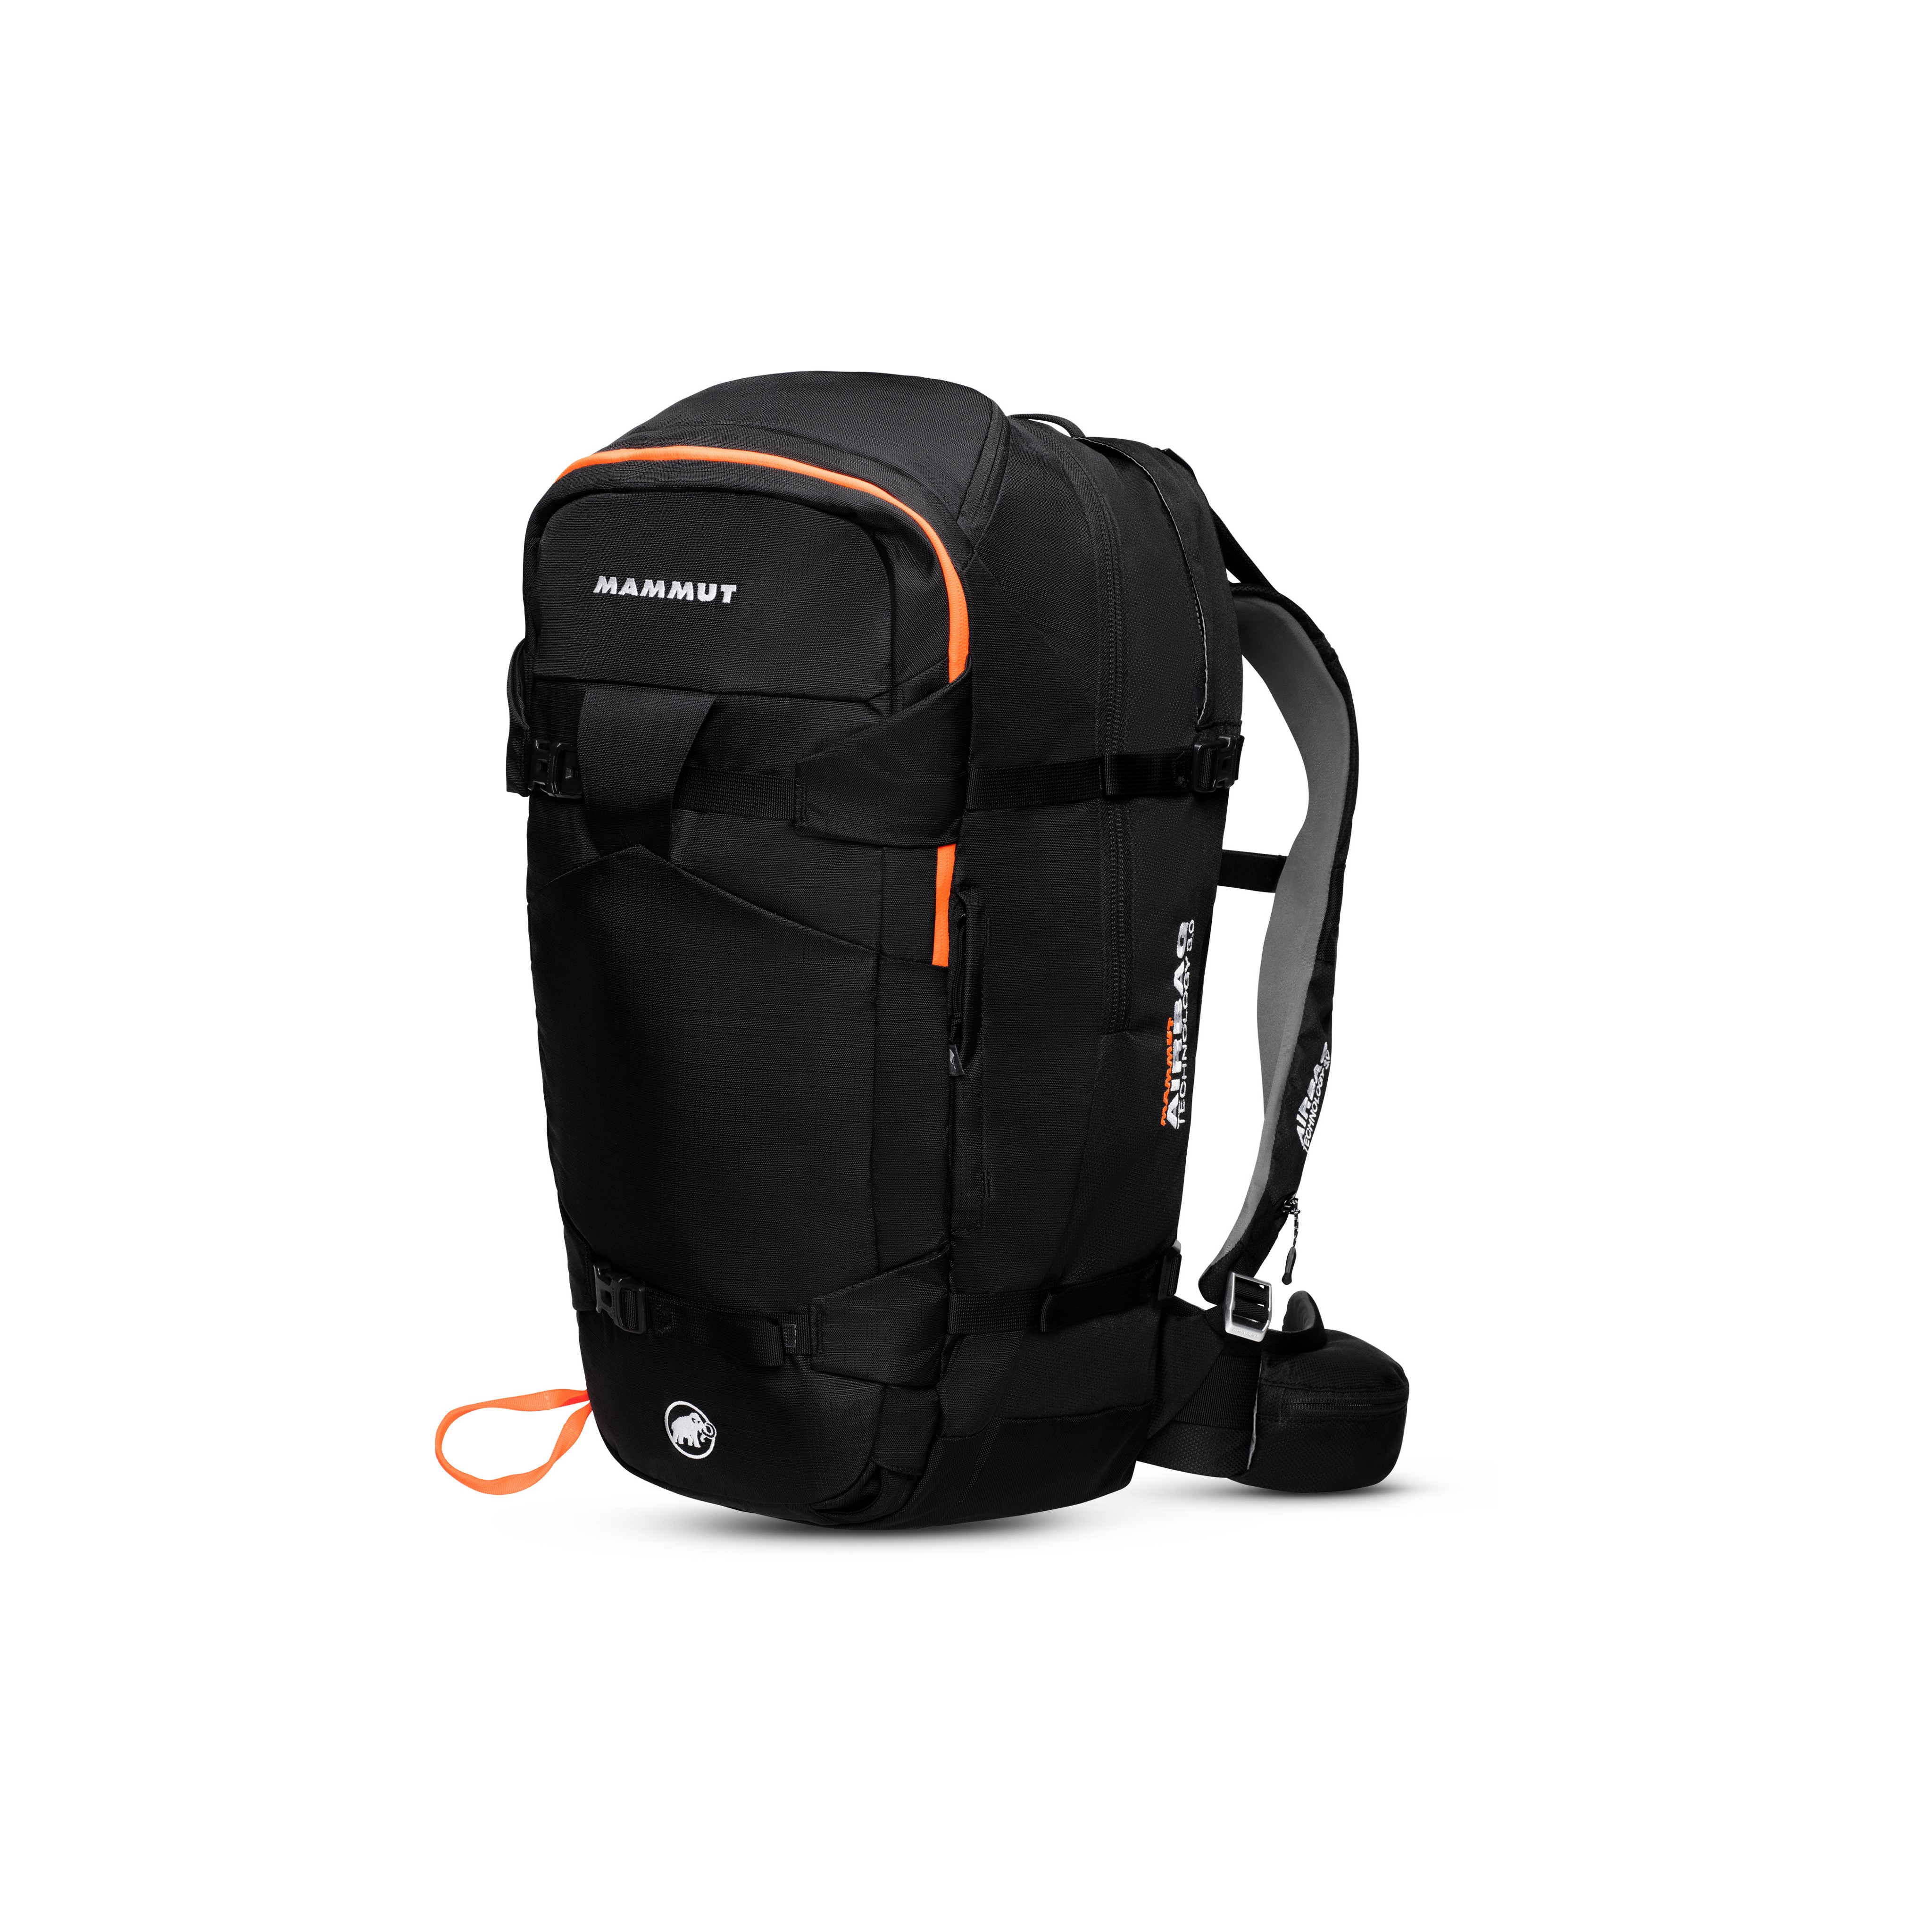 Pro Removable Airbag 3.0 - black-vibrant orange, 45 L product image